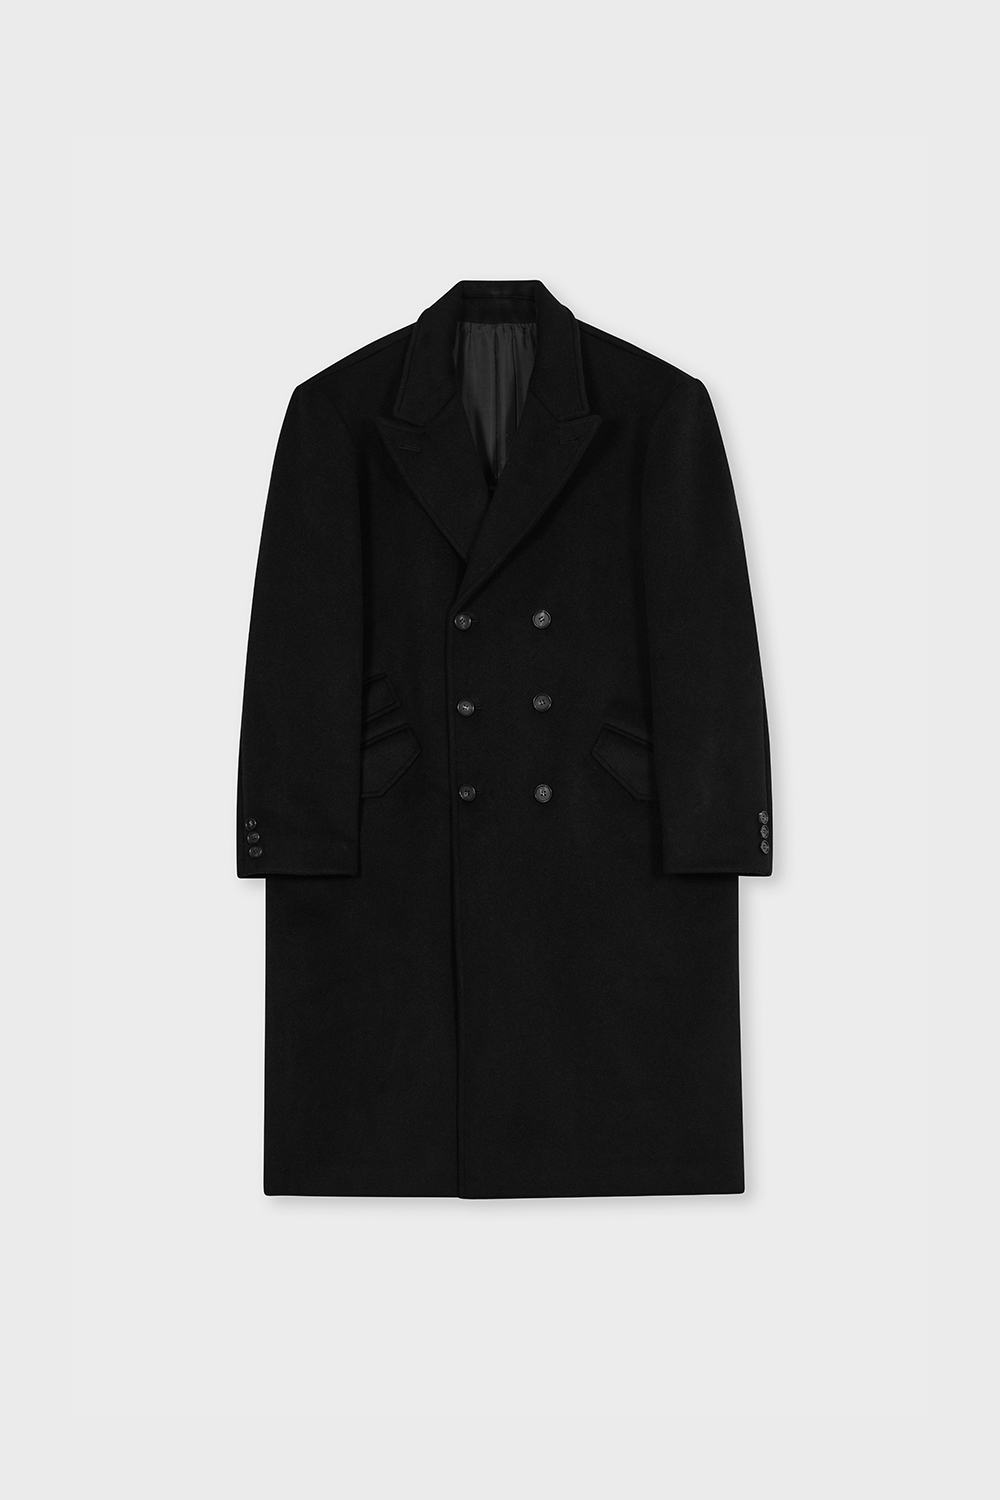 TETRA Multi Double Coat (Black)